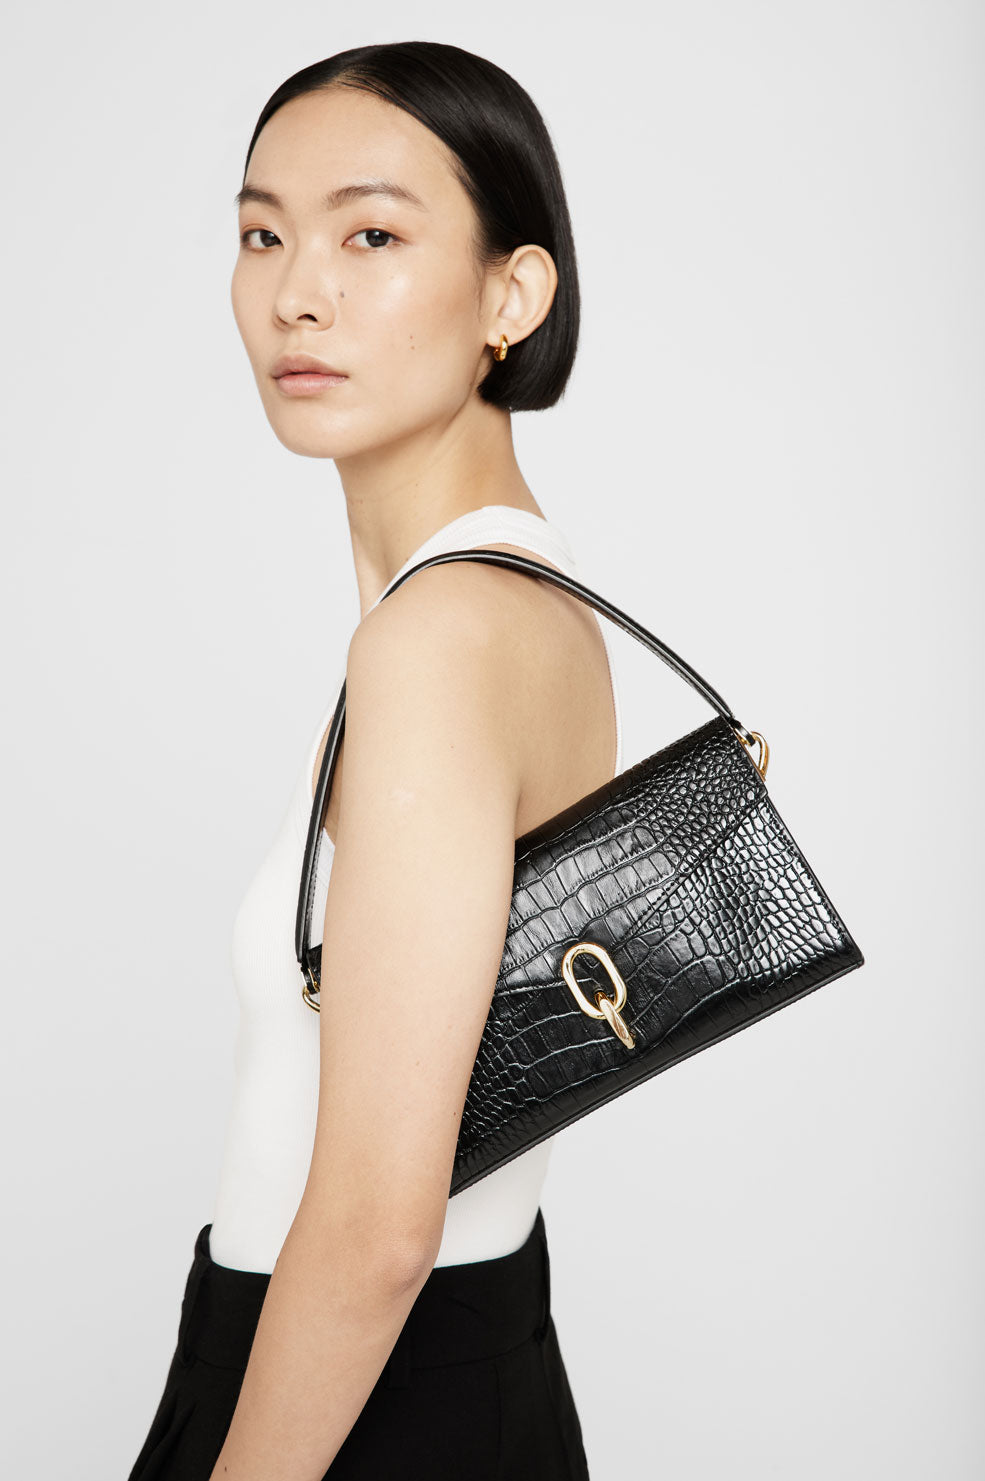 Ladies Handbags Clearance - Bing - Shopping